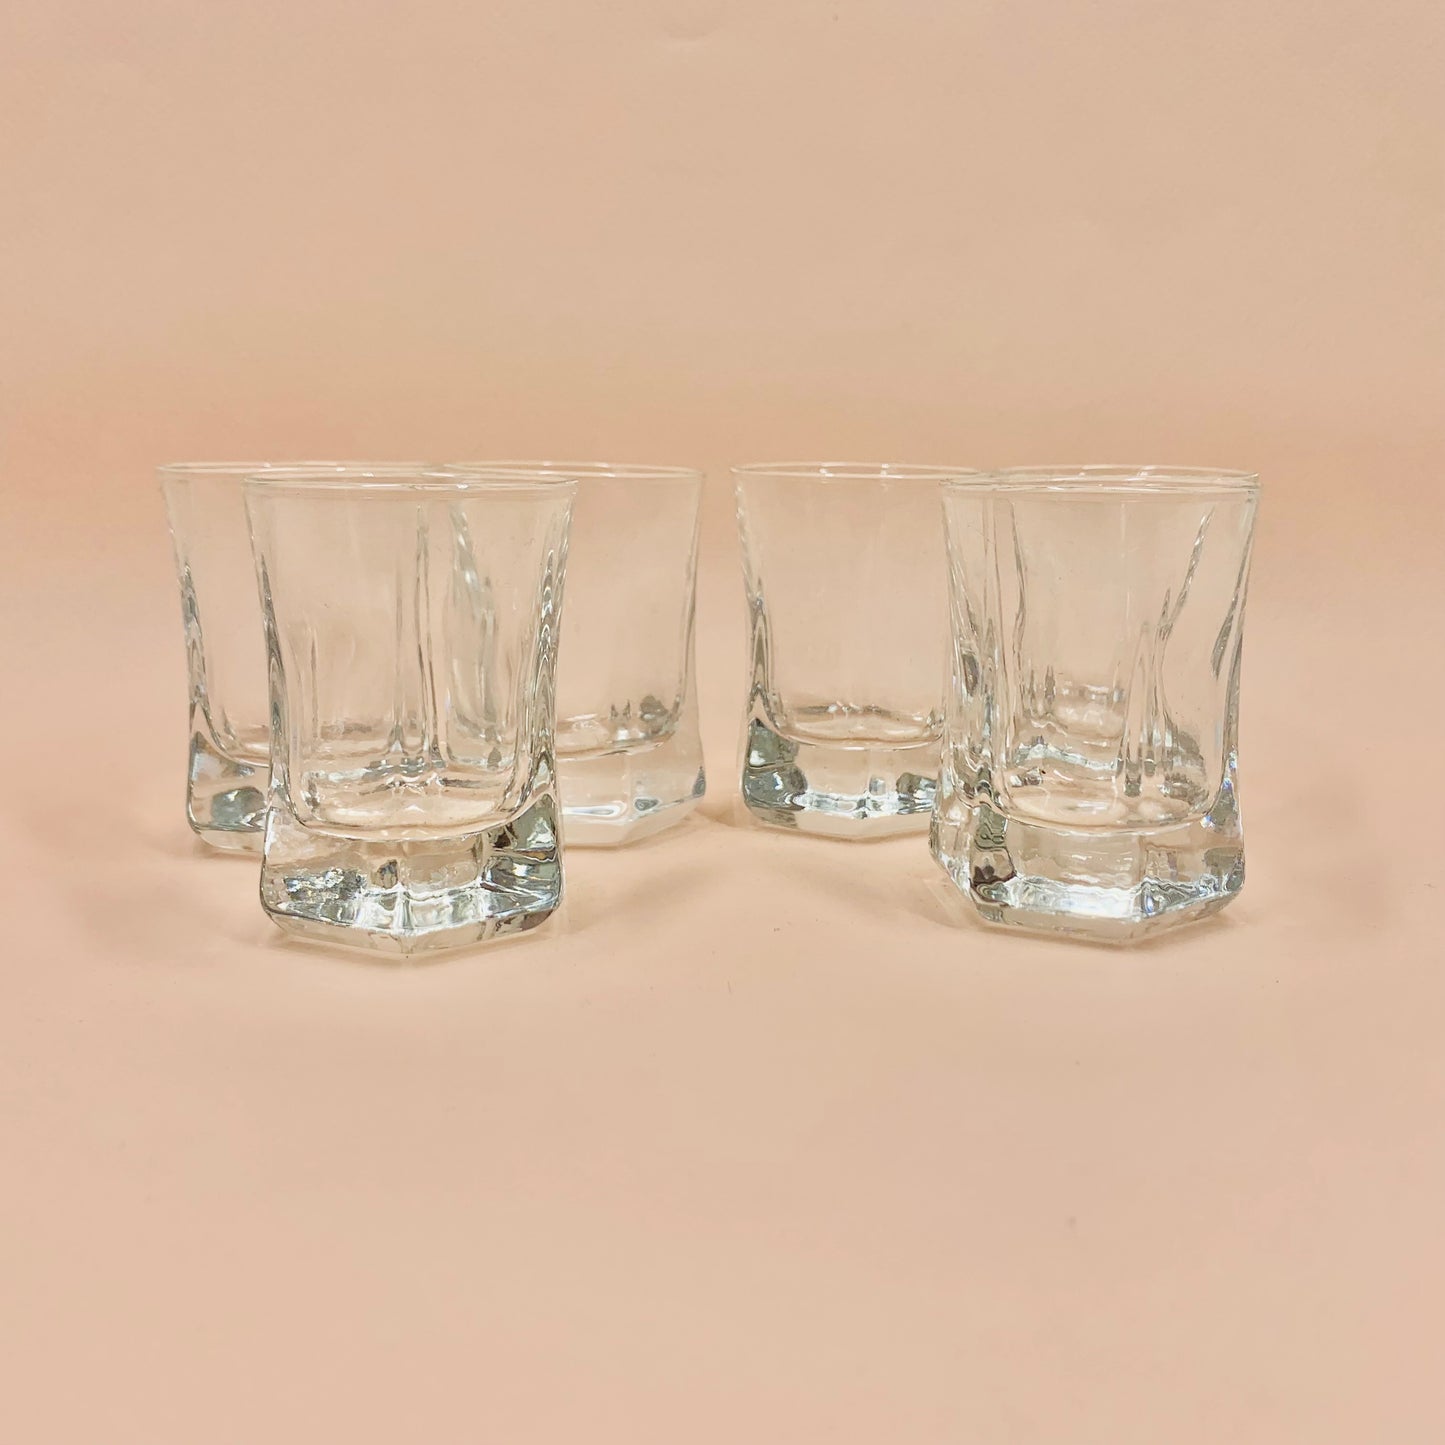 Vintage Bormioli glass decanter and matching shot glasses